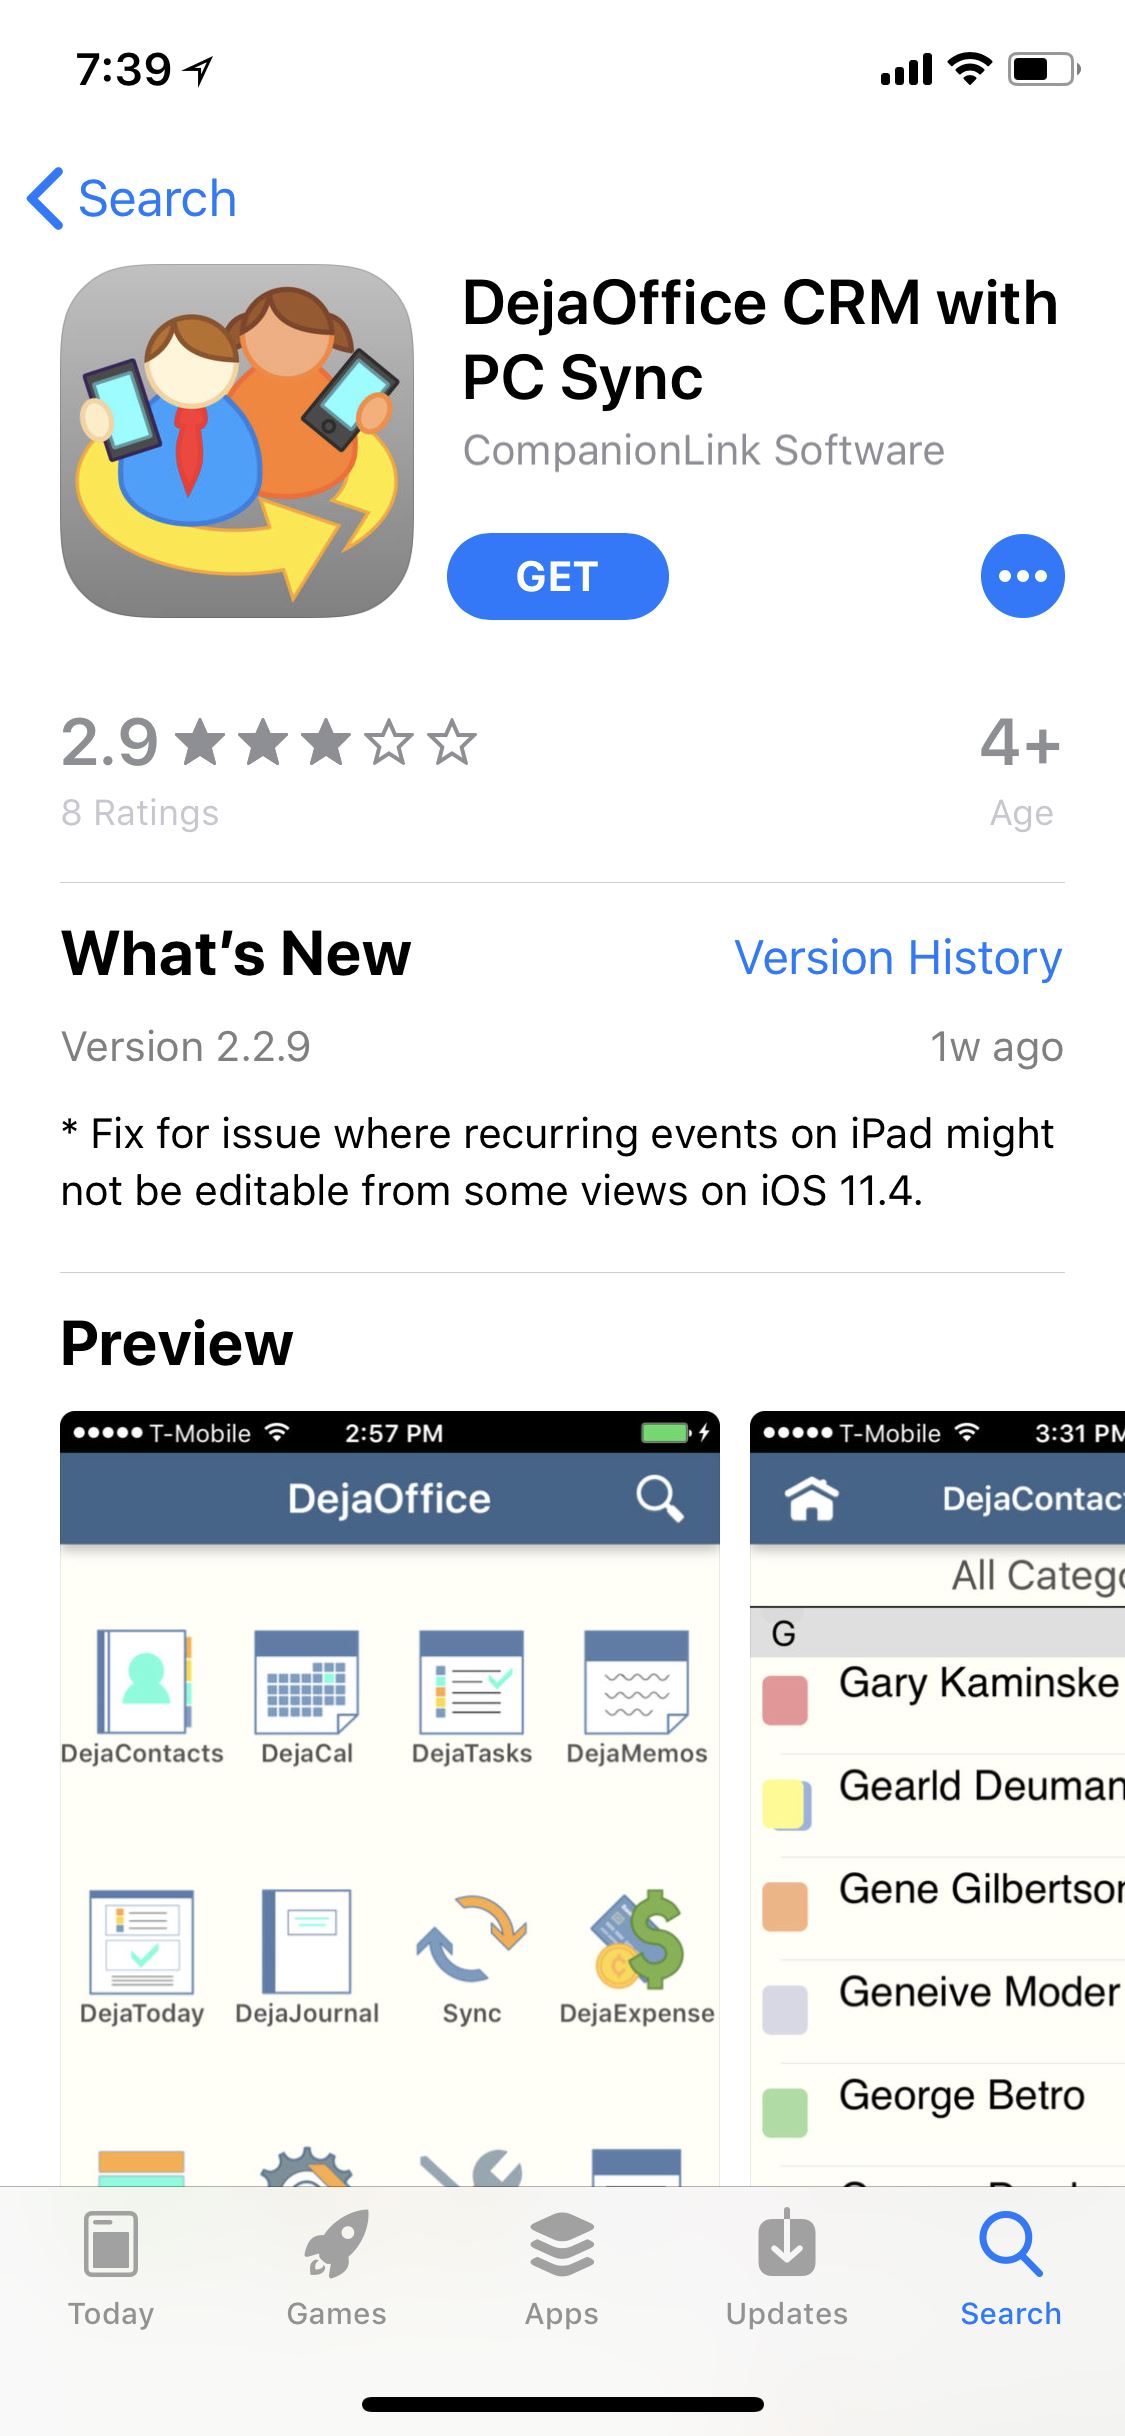 Download DejaOffice from the Apple App Store